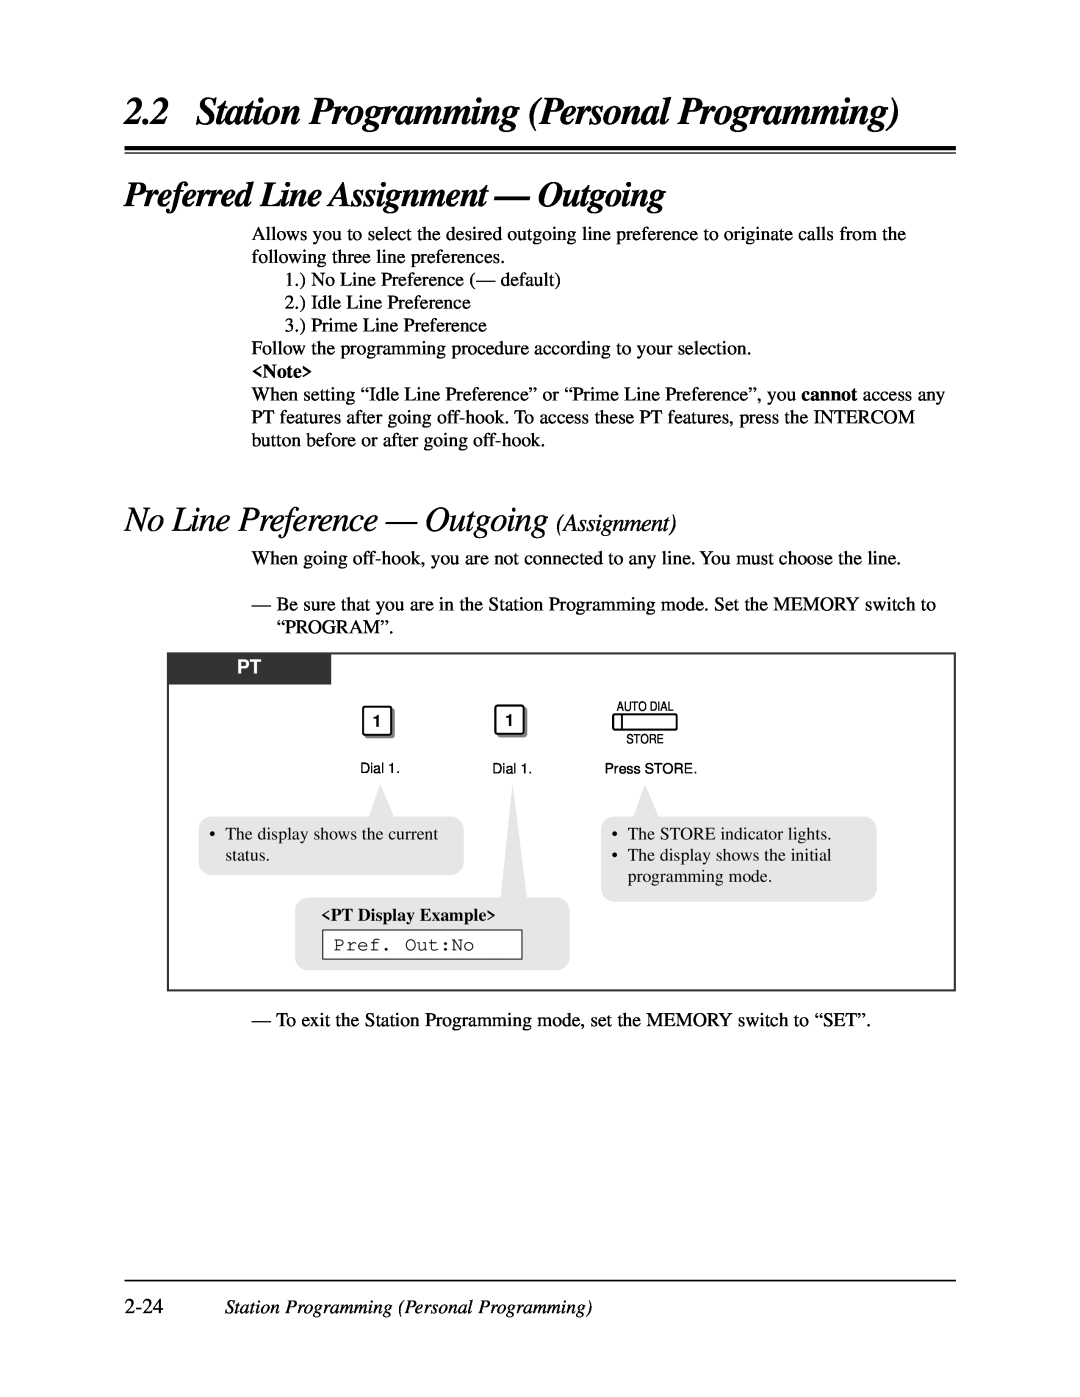 Panasonic KX-TA624 user manual Preferred Line Assignment - Outgoing, No Line Preference — Outgoing Assignment 